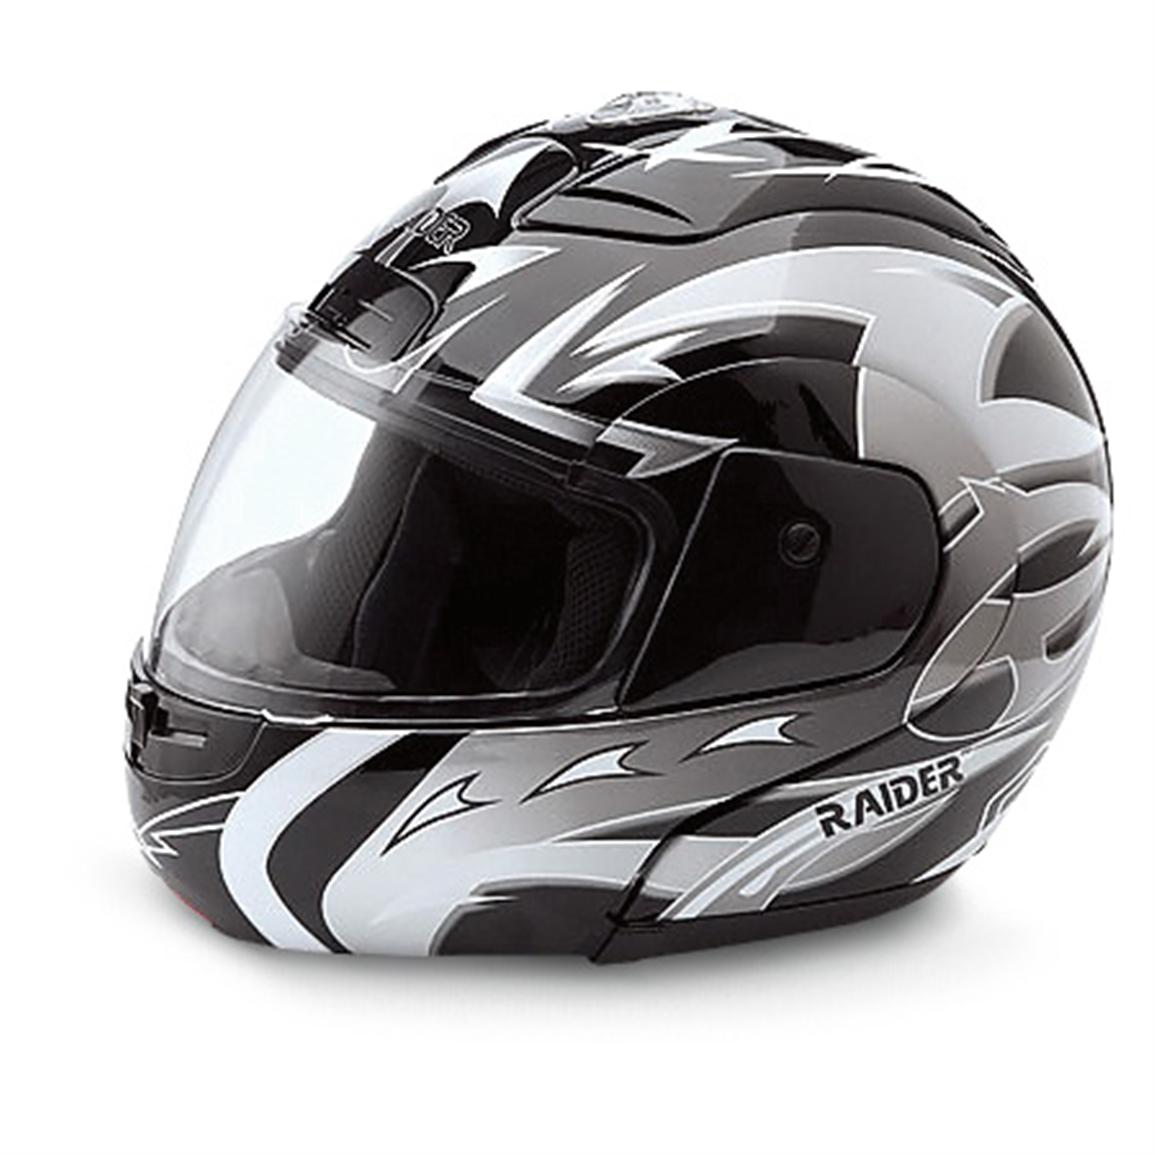 Raider™ Modular Motorcycle Helmet - 157722, Helmets & Goggles at